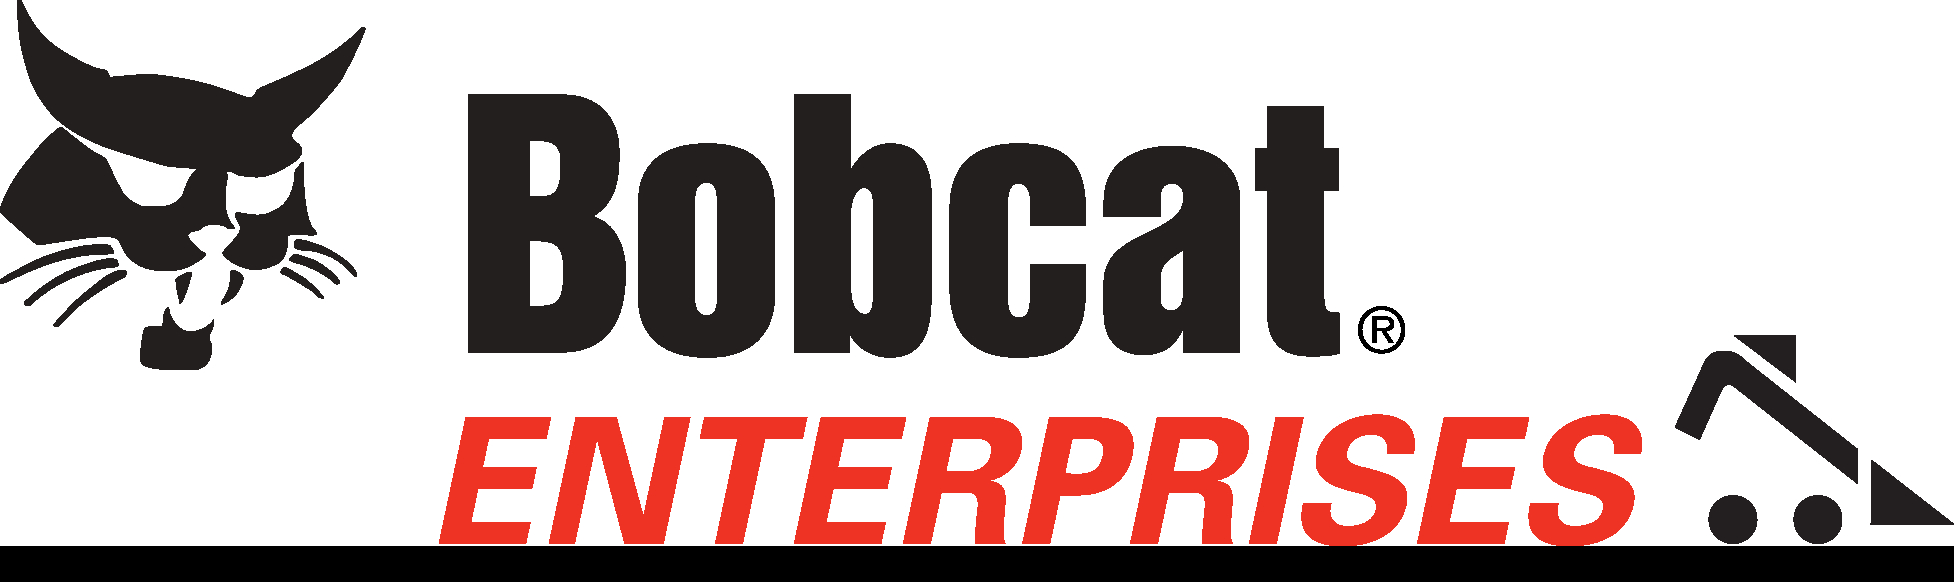 Bobcat Enterprises, Inc. company logo